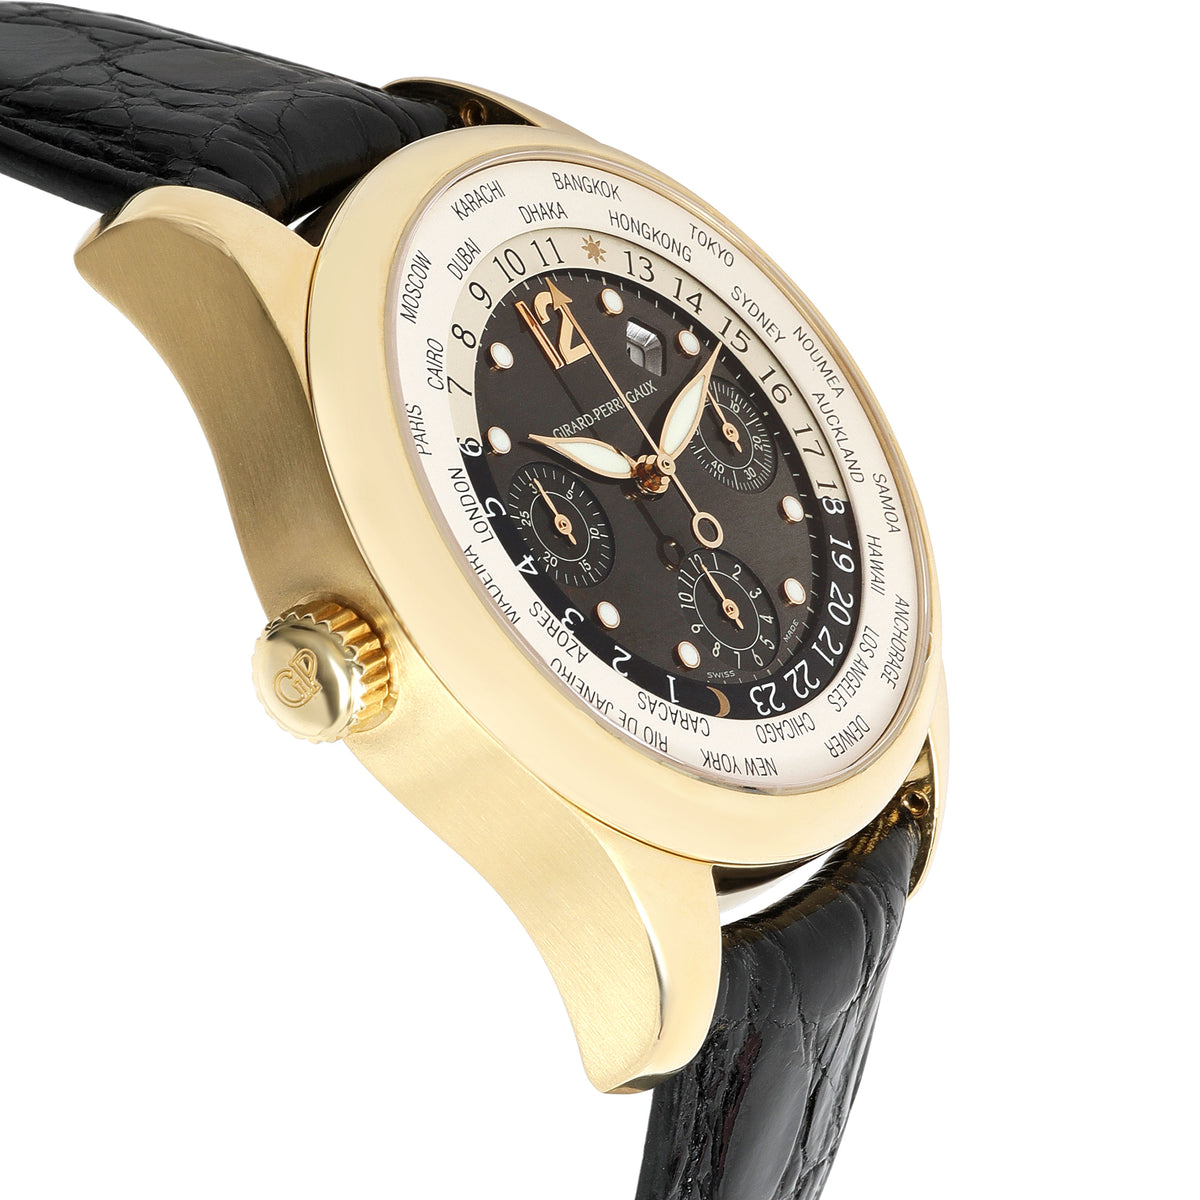 Girard Perregaux WW.TC Traveller 4980 Men's Watch in 18kt Yellow Gold